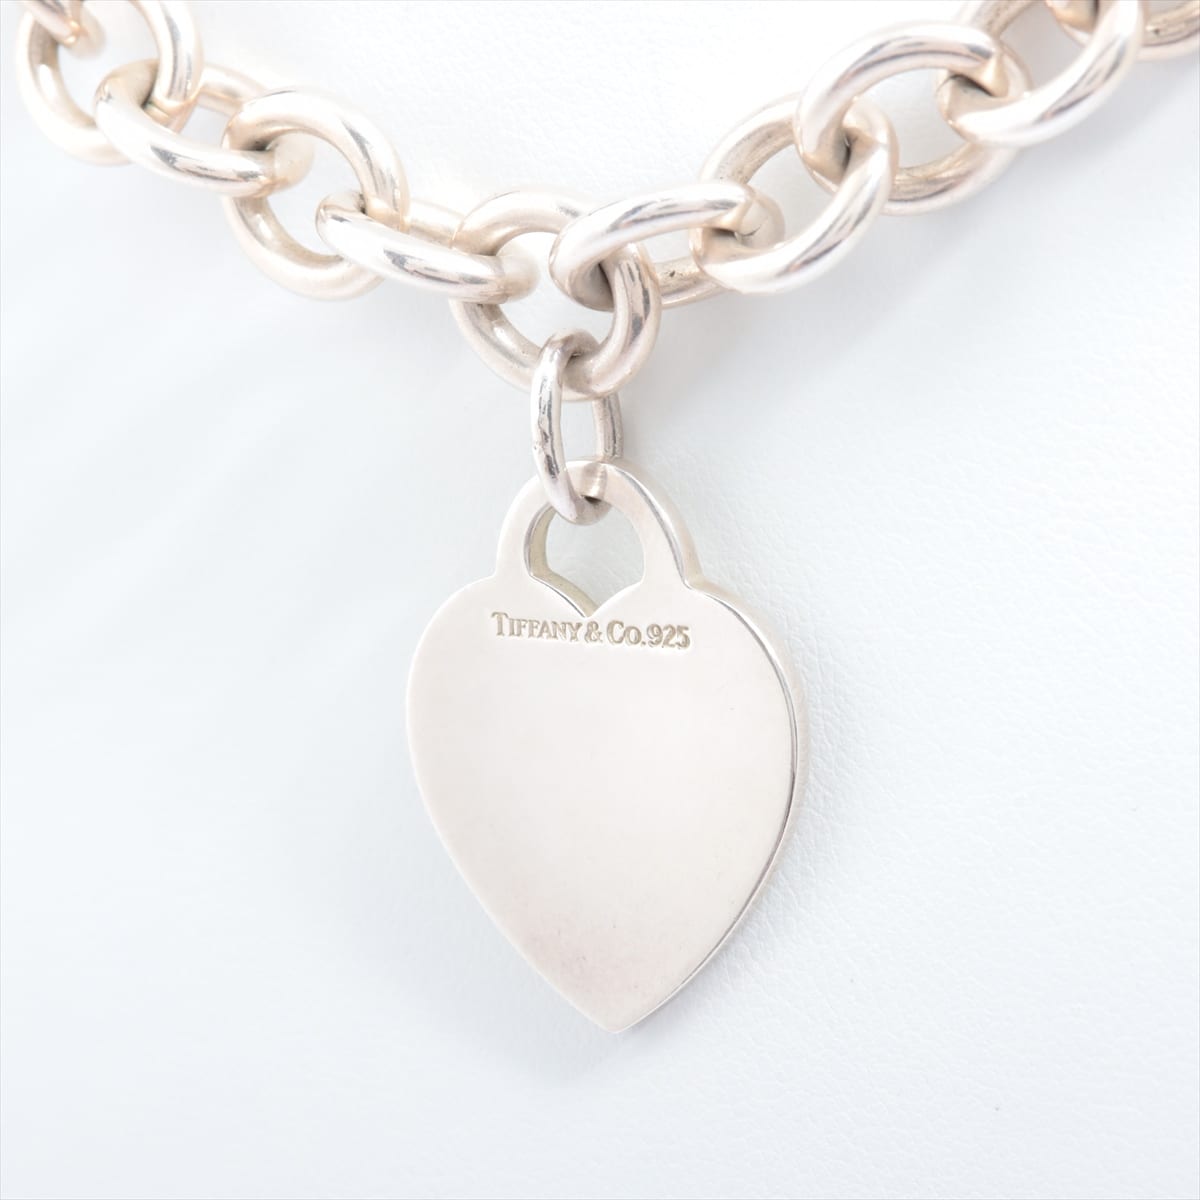 Tiffany Return To Tiffany Heart Tag Necklace 925 68.5g Silver